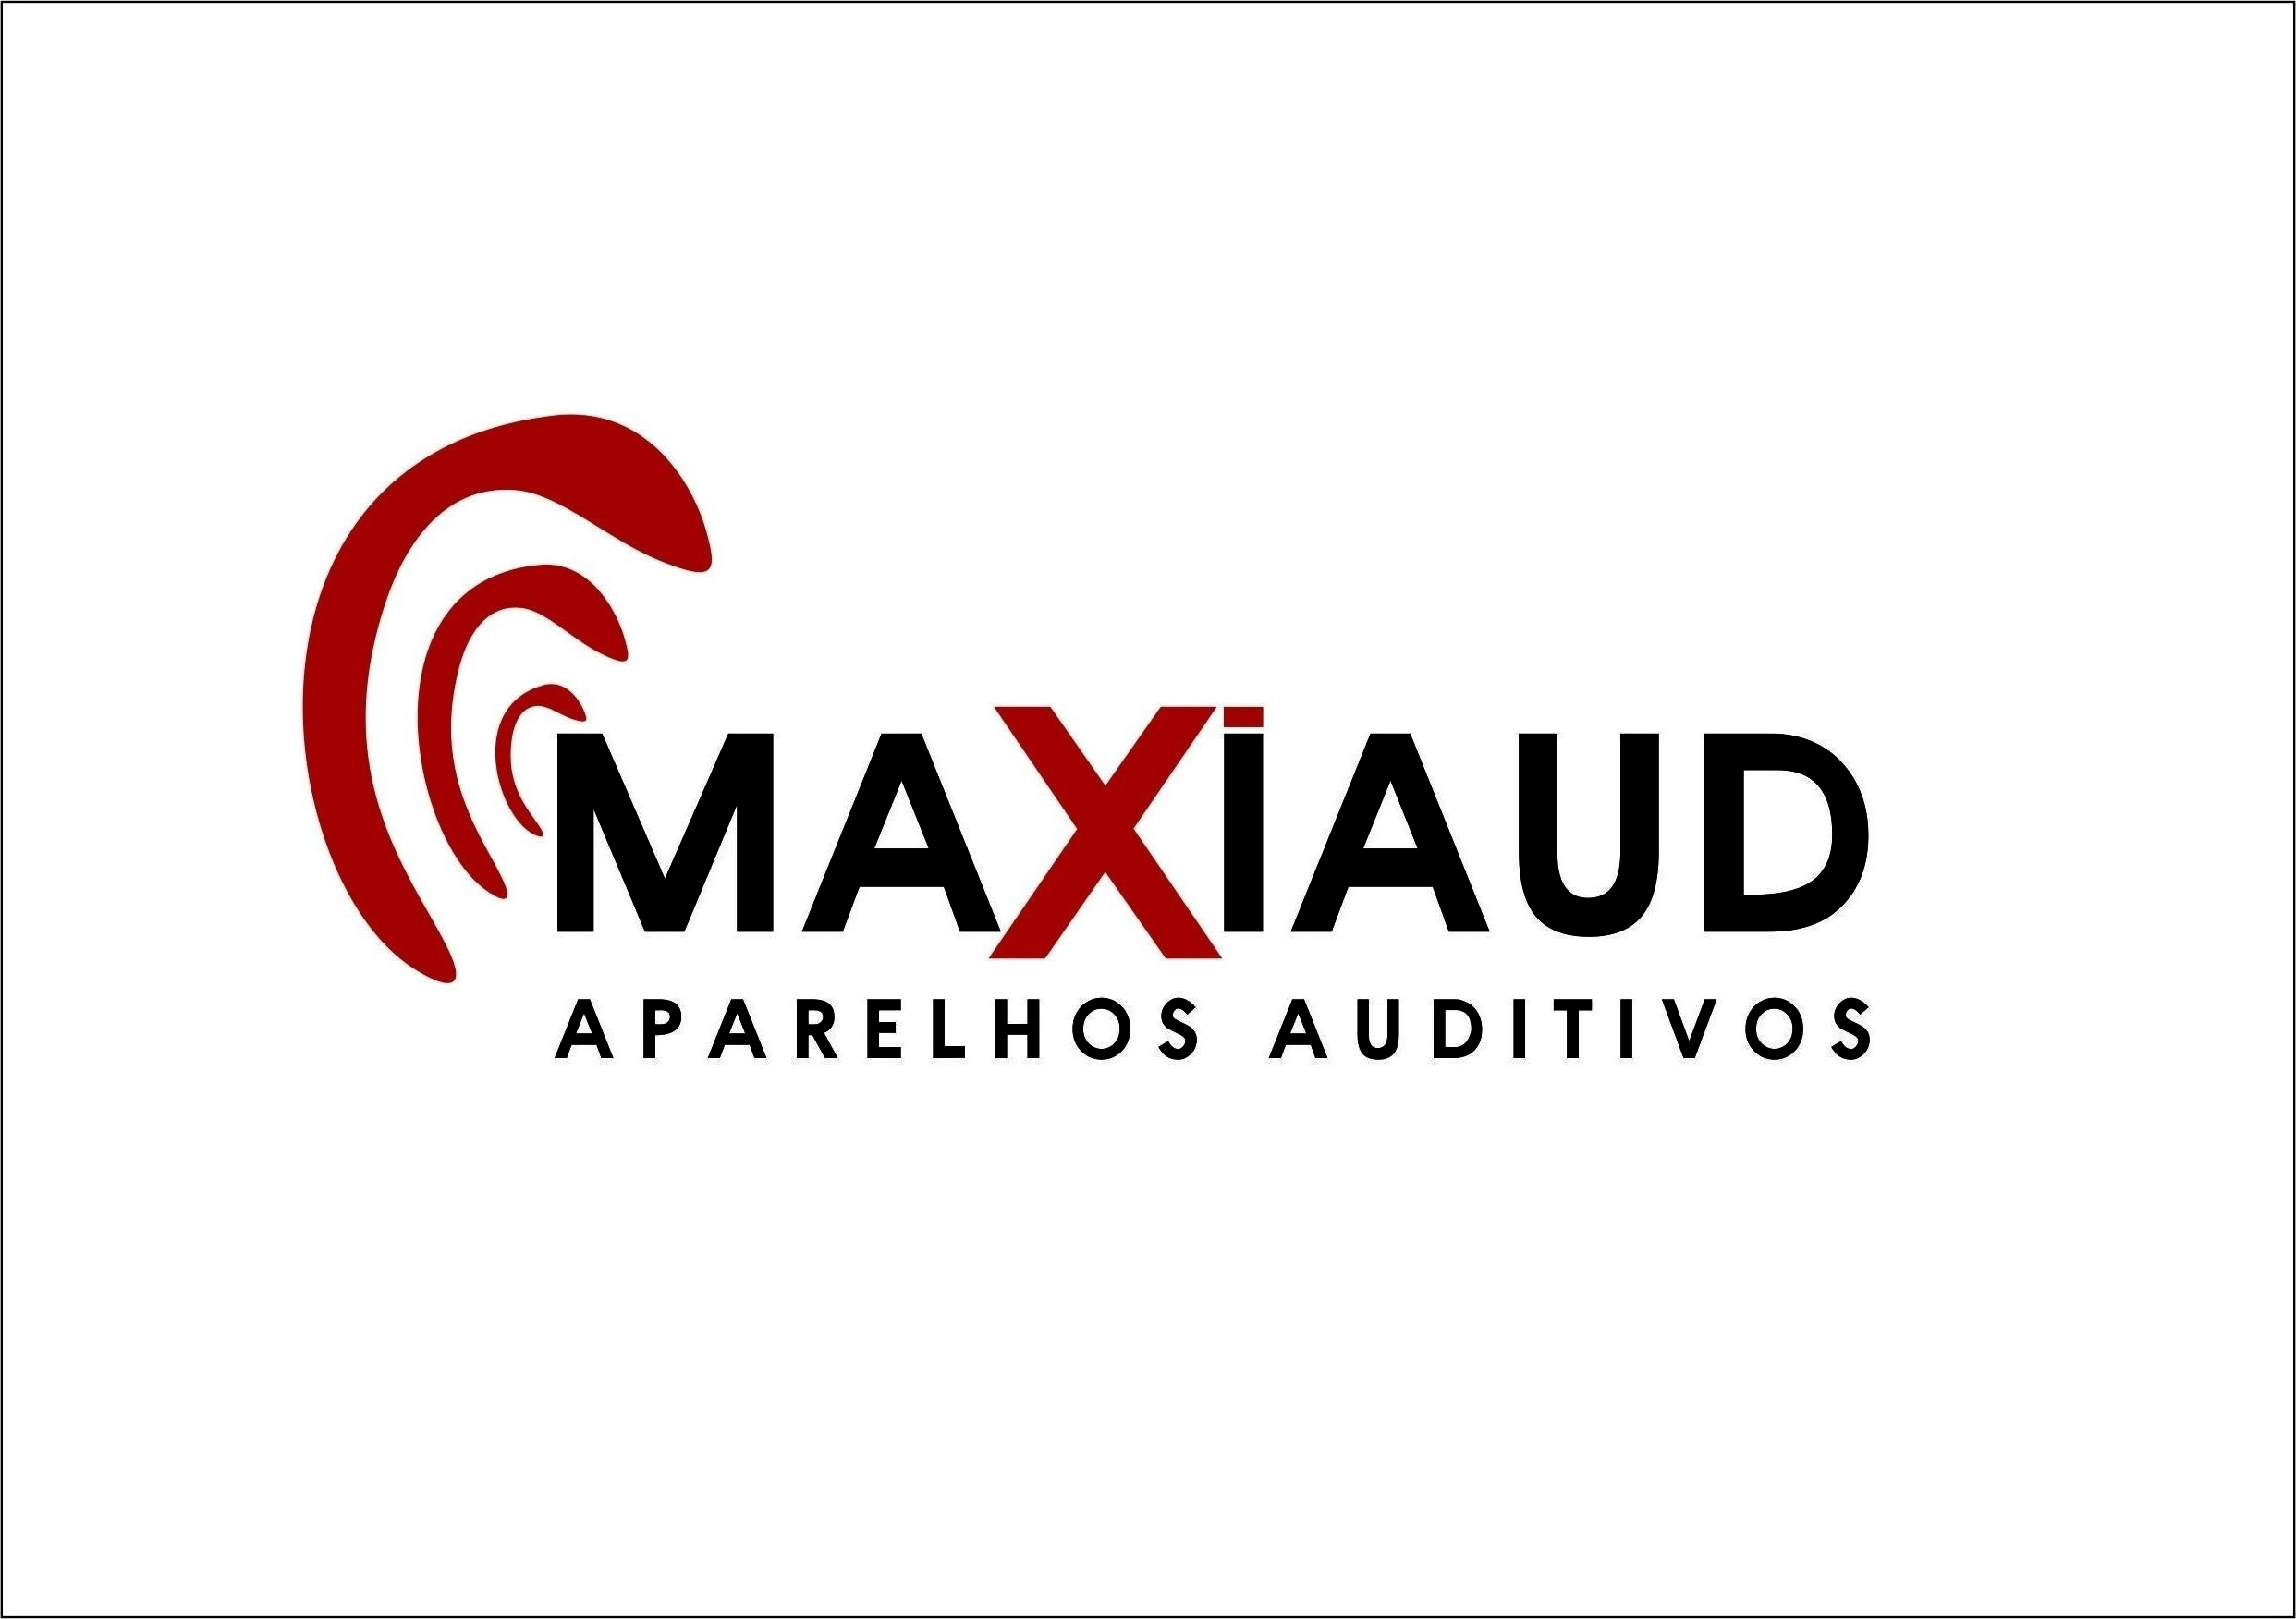 MAXIAUD APARELHOS AUDITIVOS